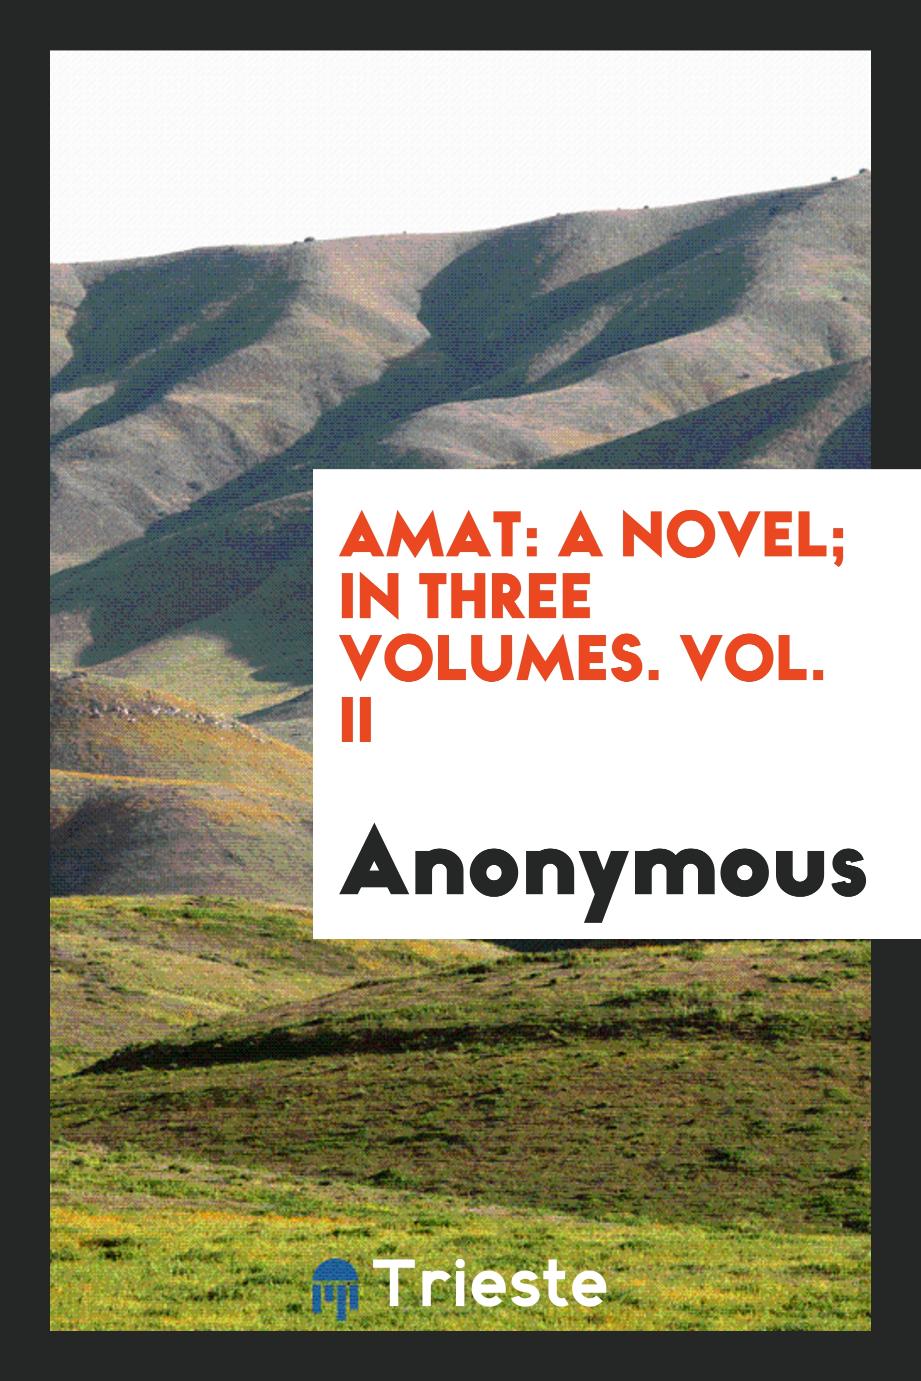 Amat: a novel; in three volumes. Vol. II